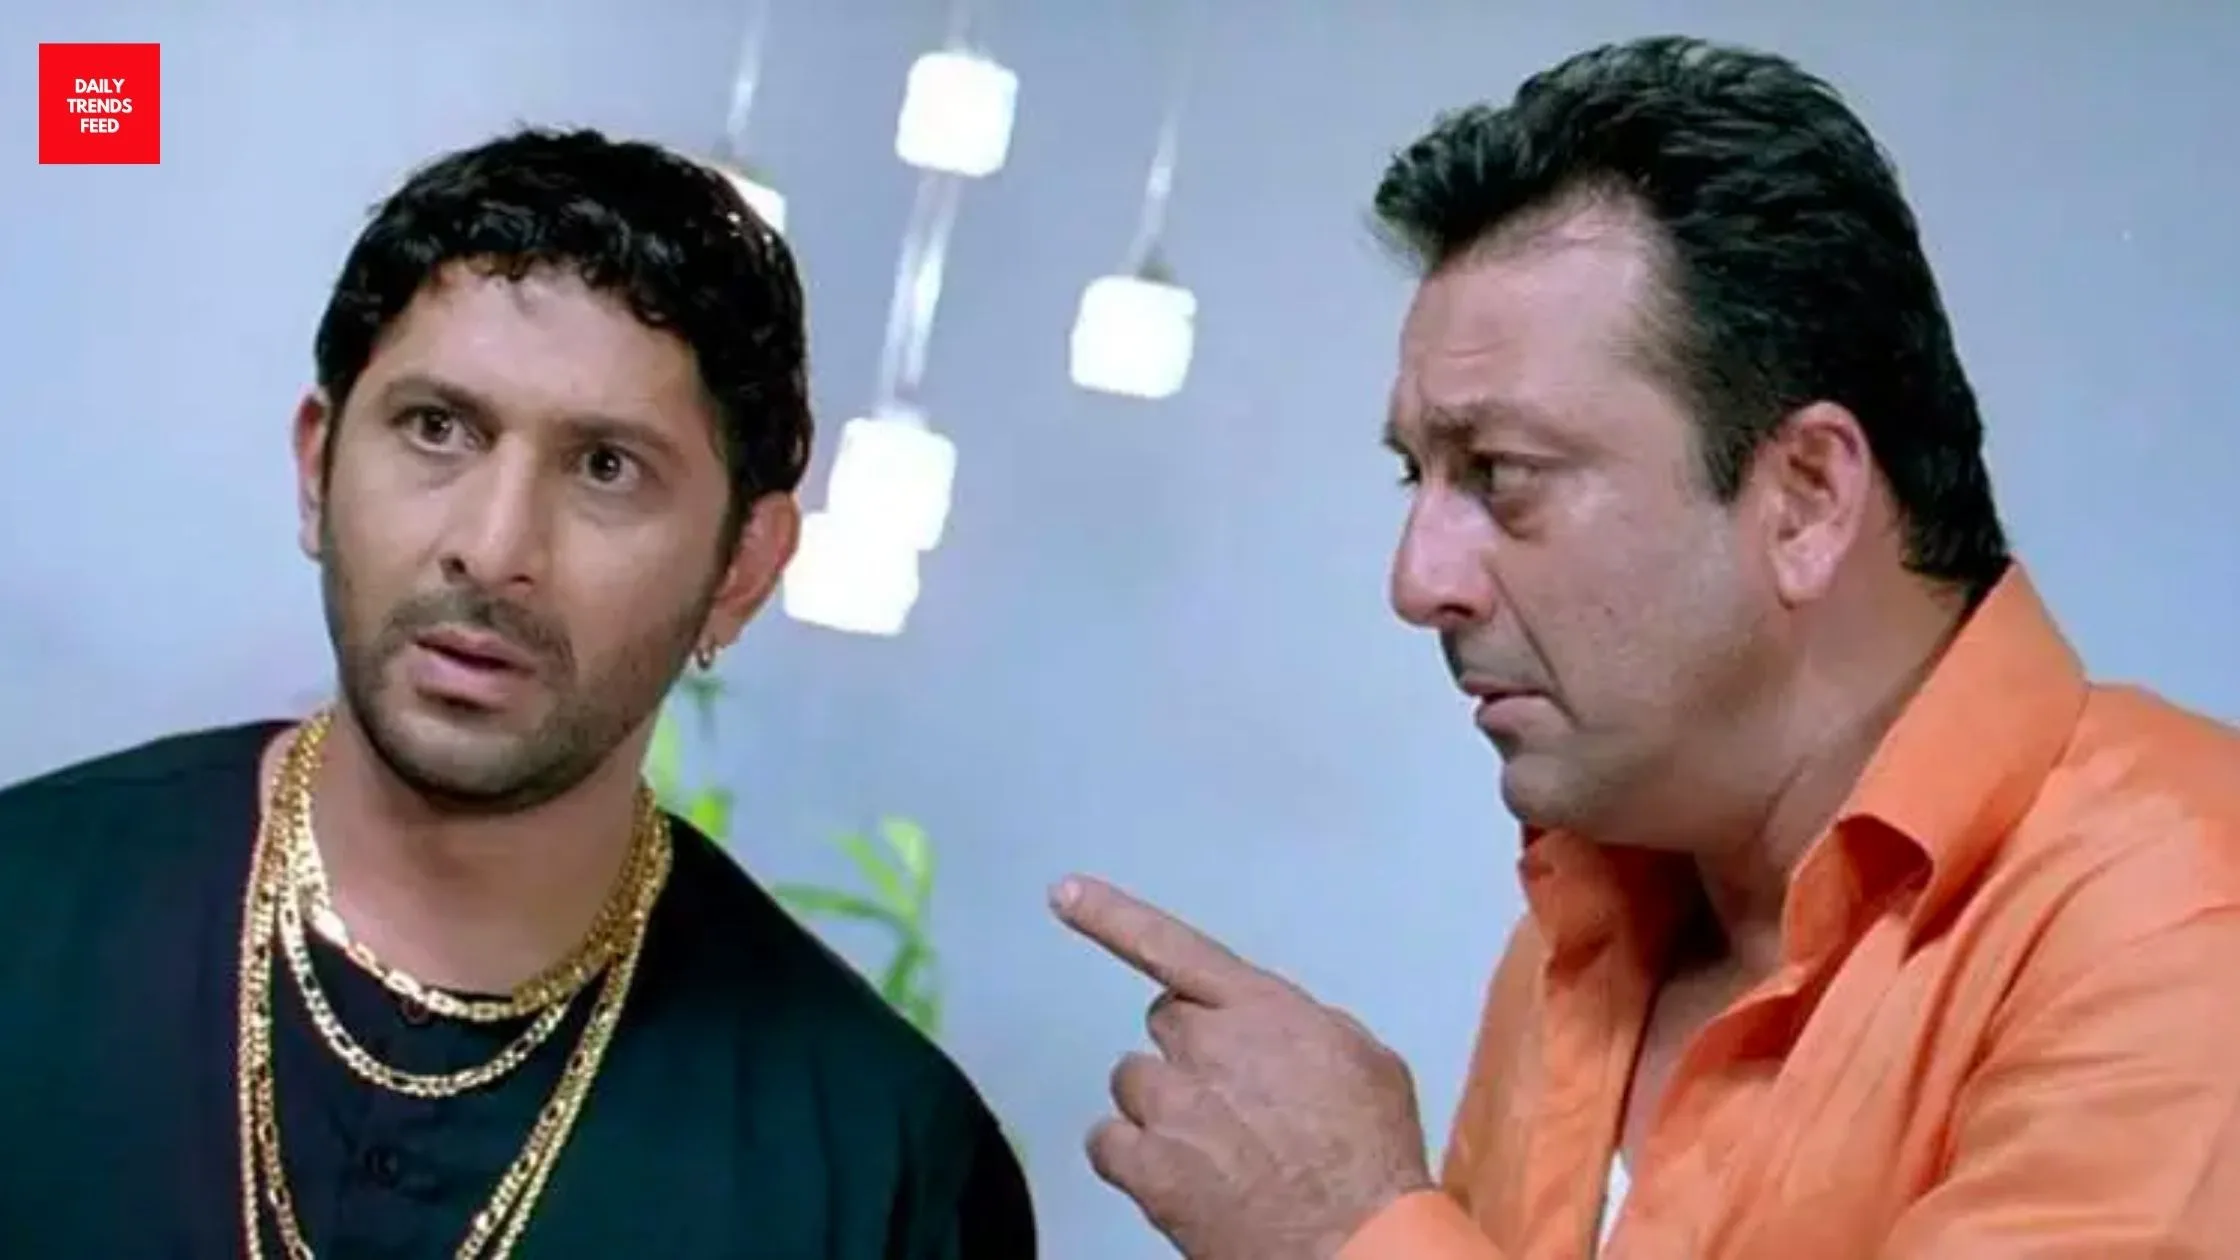 Comedy Hindi Movies On Amazon Prime: Munna Bhai MBBS